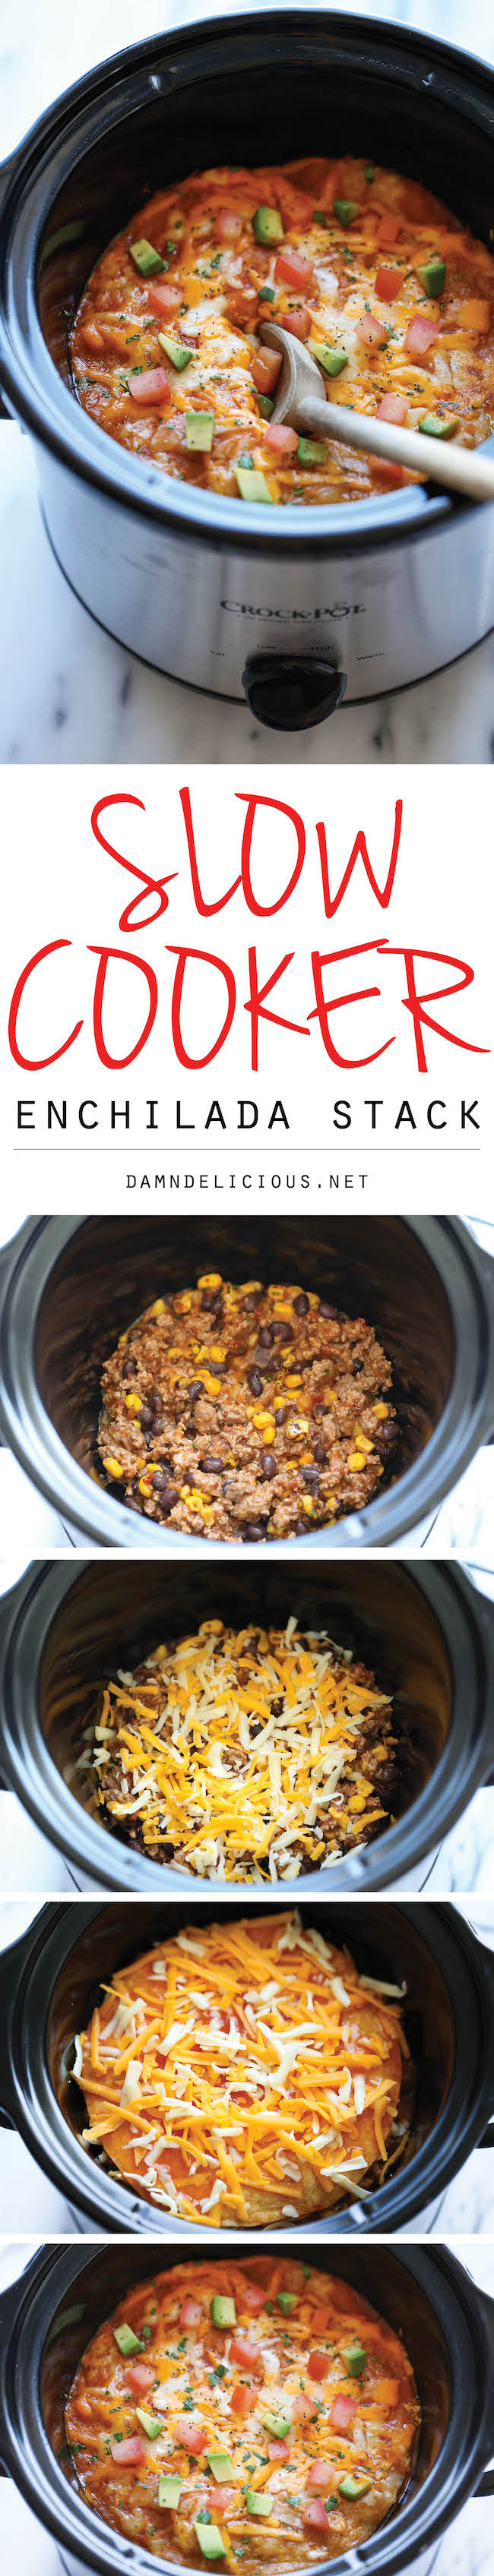 https://s23209.pcdn.co/wp-content/uploads/2014/10/Slow-Cooker-Enchilada-Stack.jpg